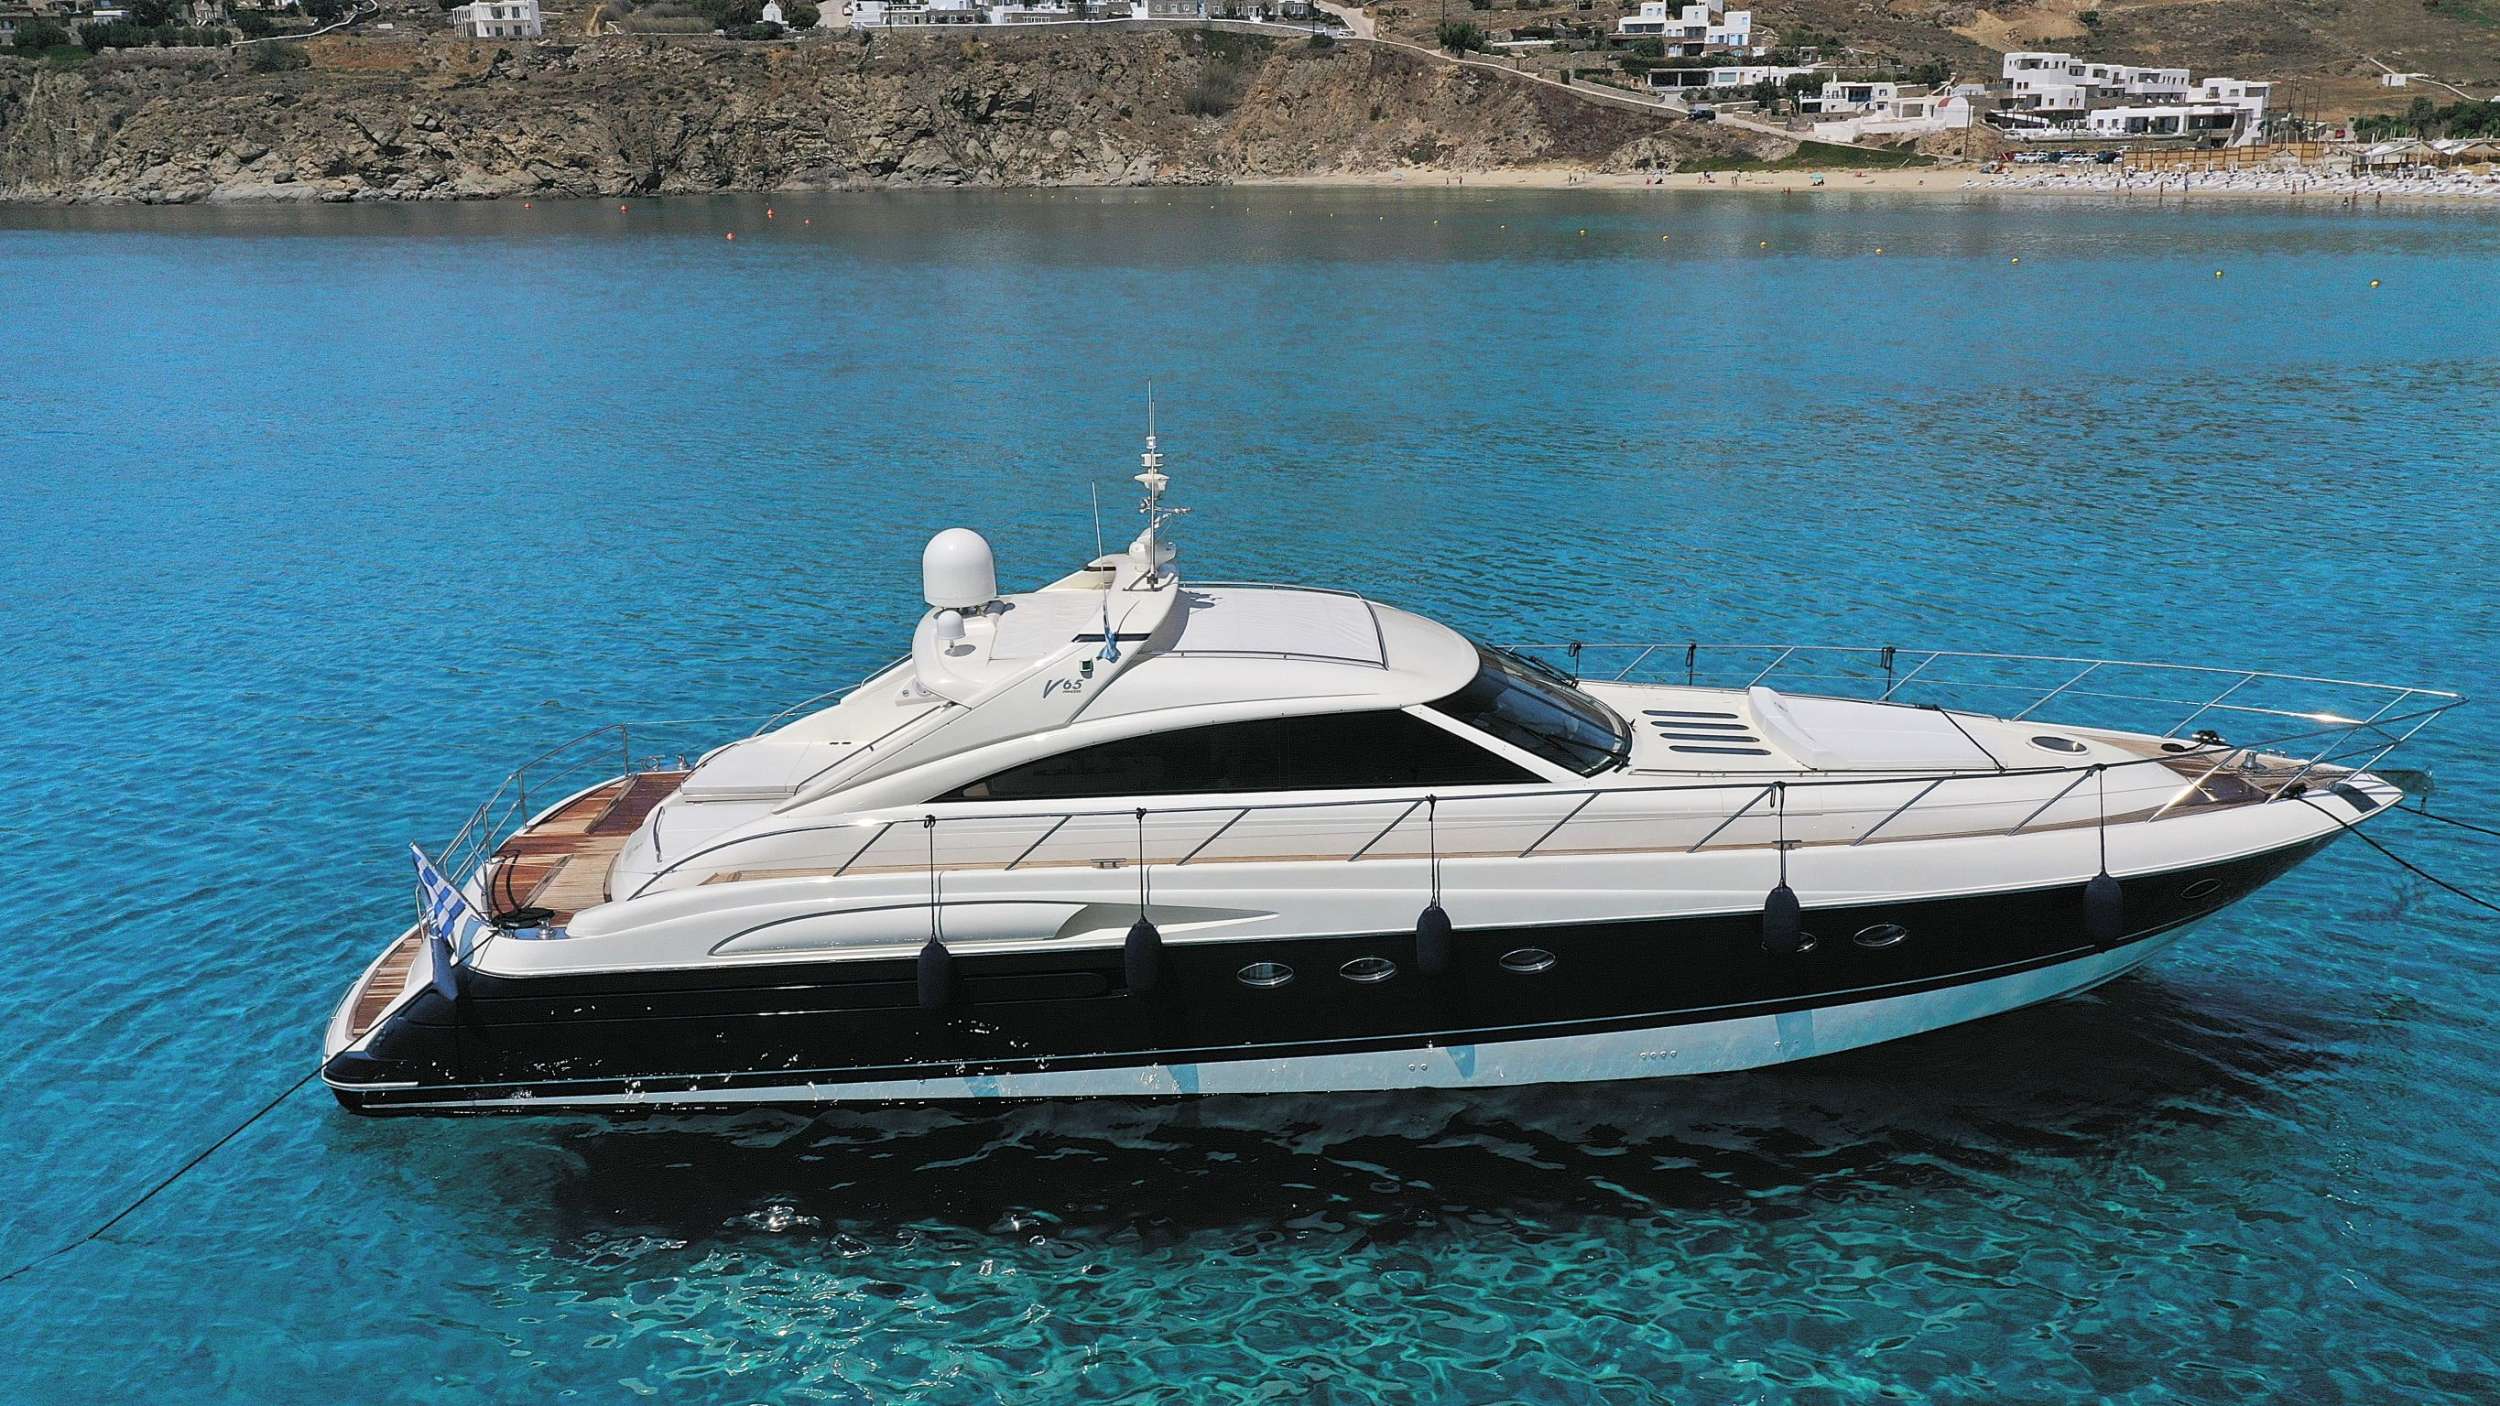 VENUS Yacht Charter - Ritzy Charters